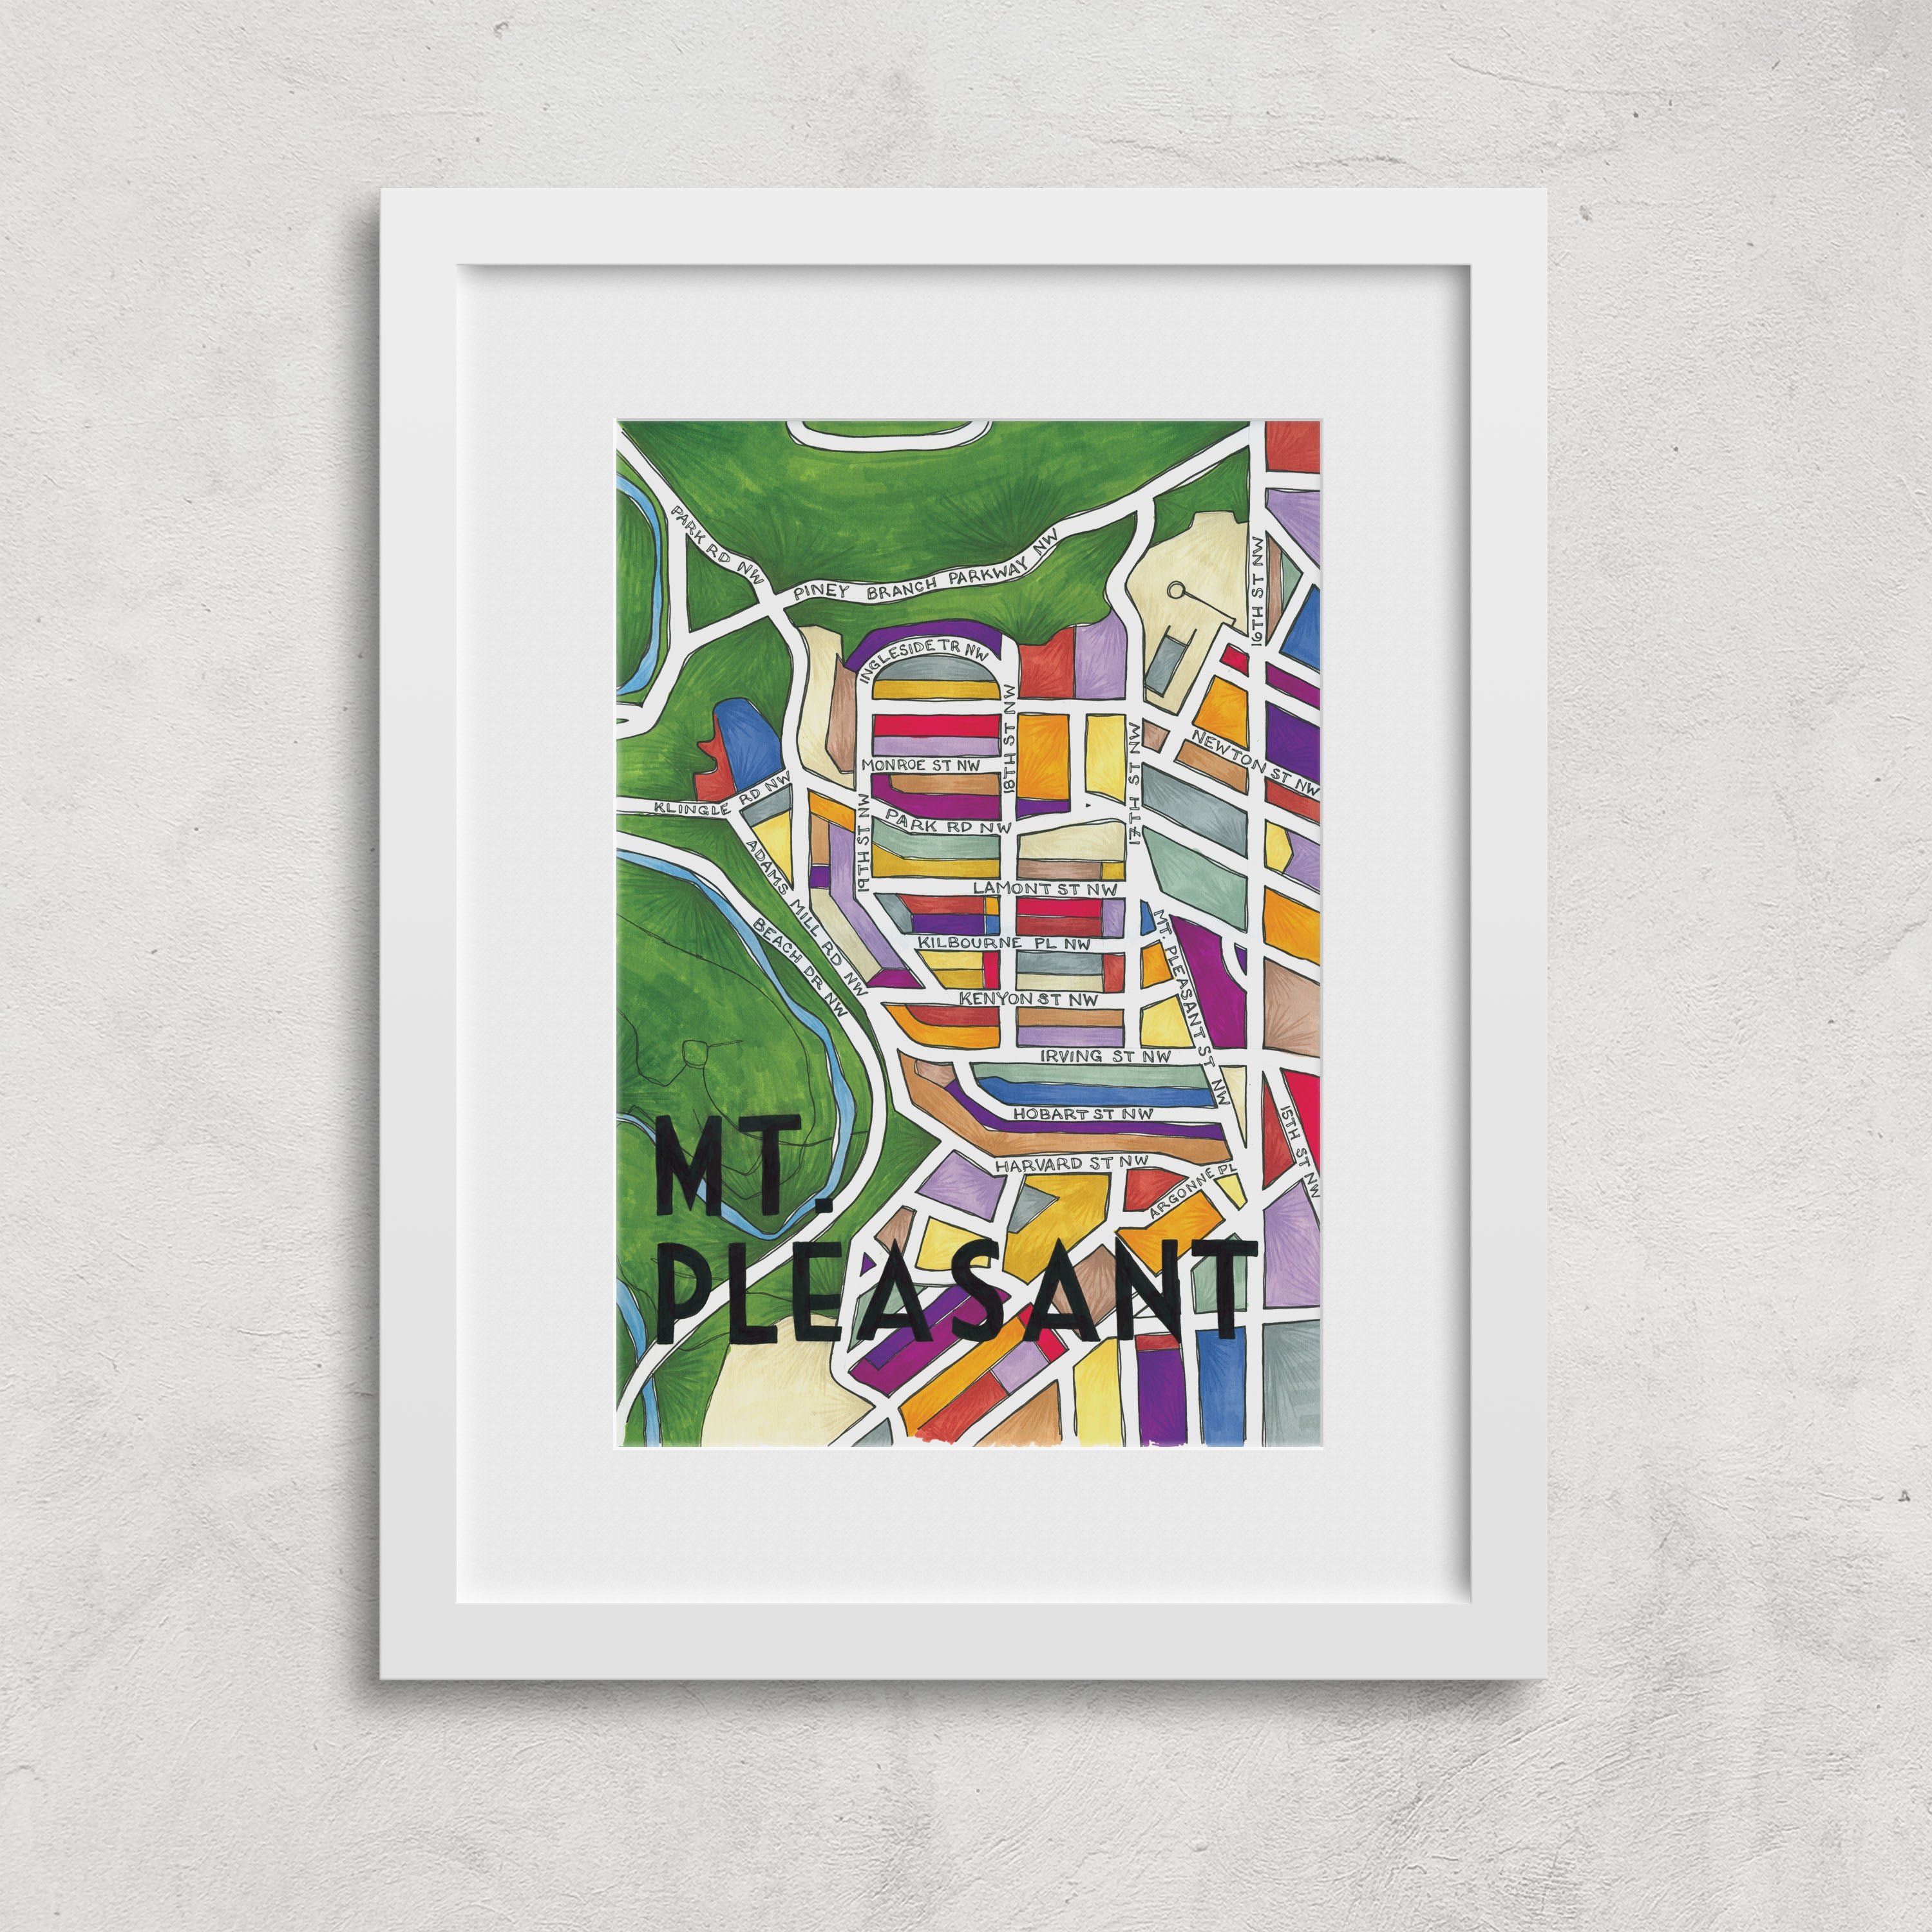 Mt. Pleasant Print